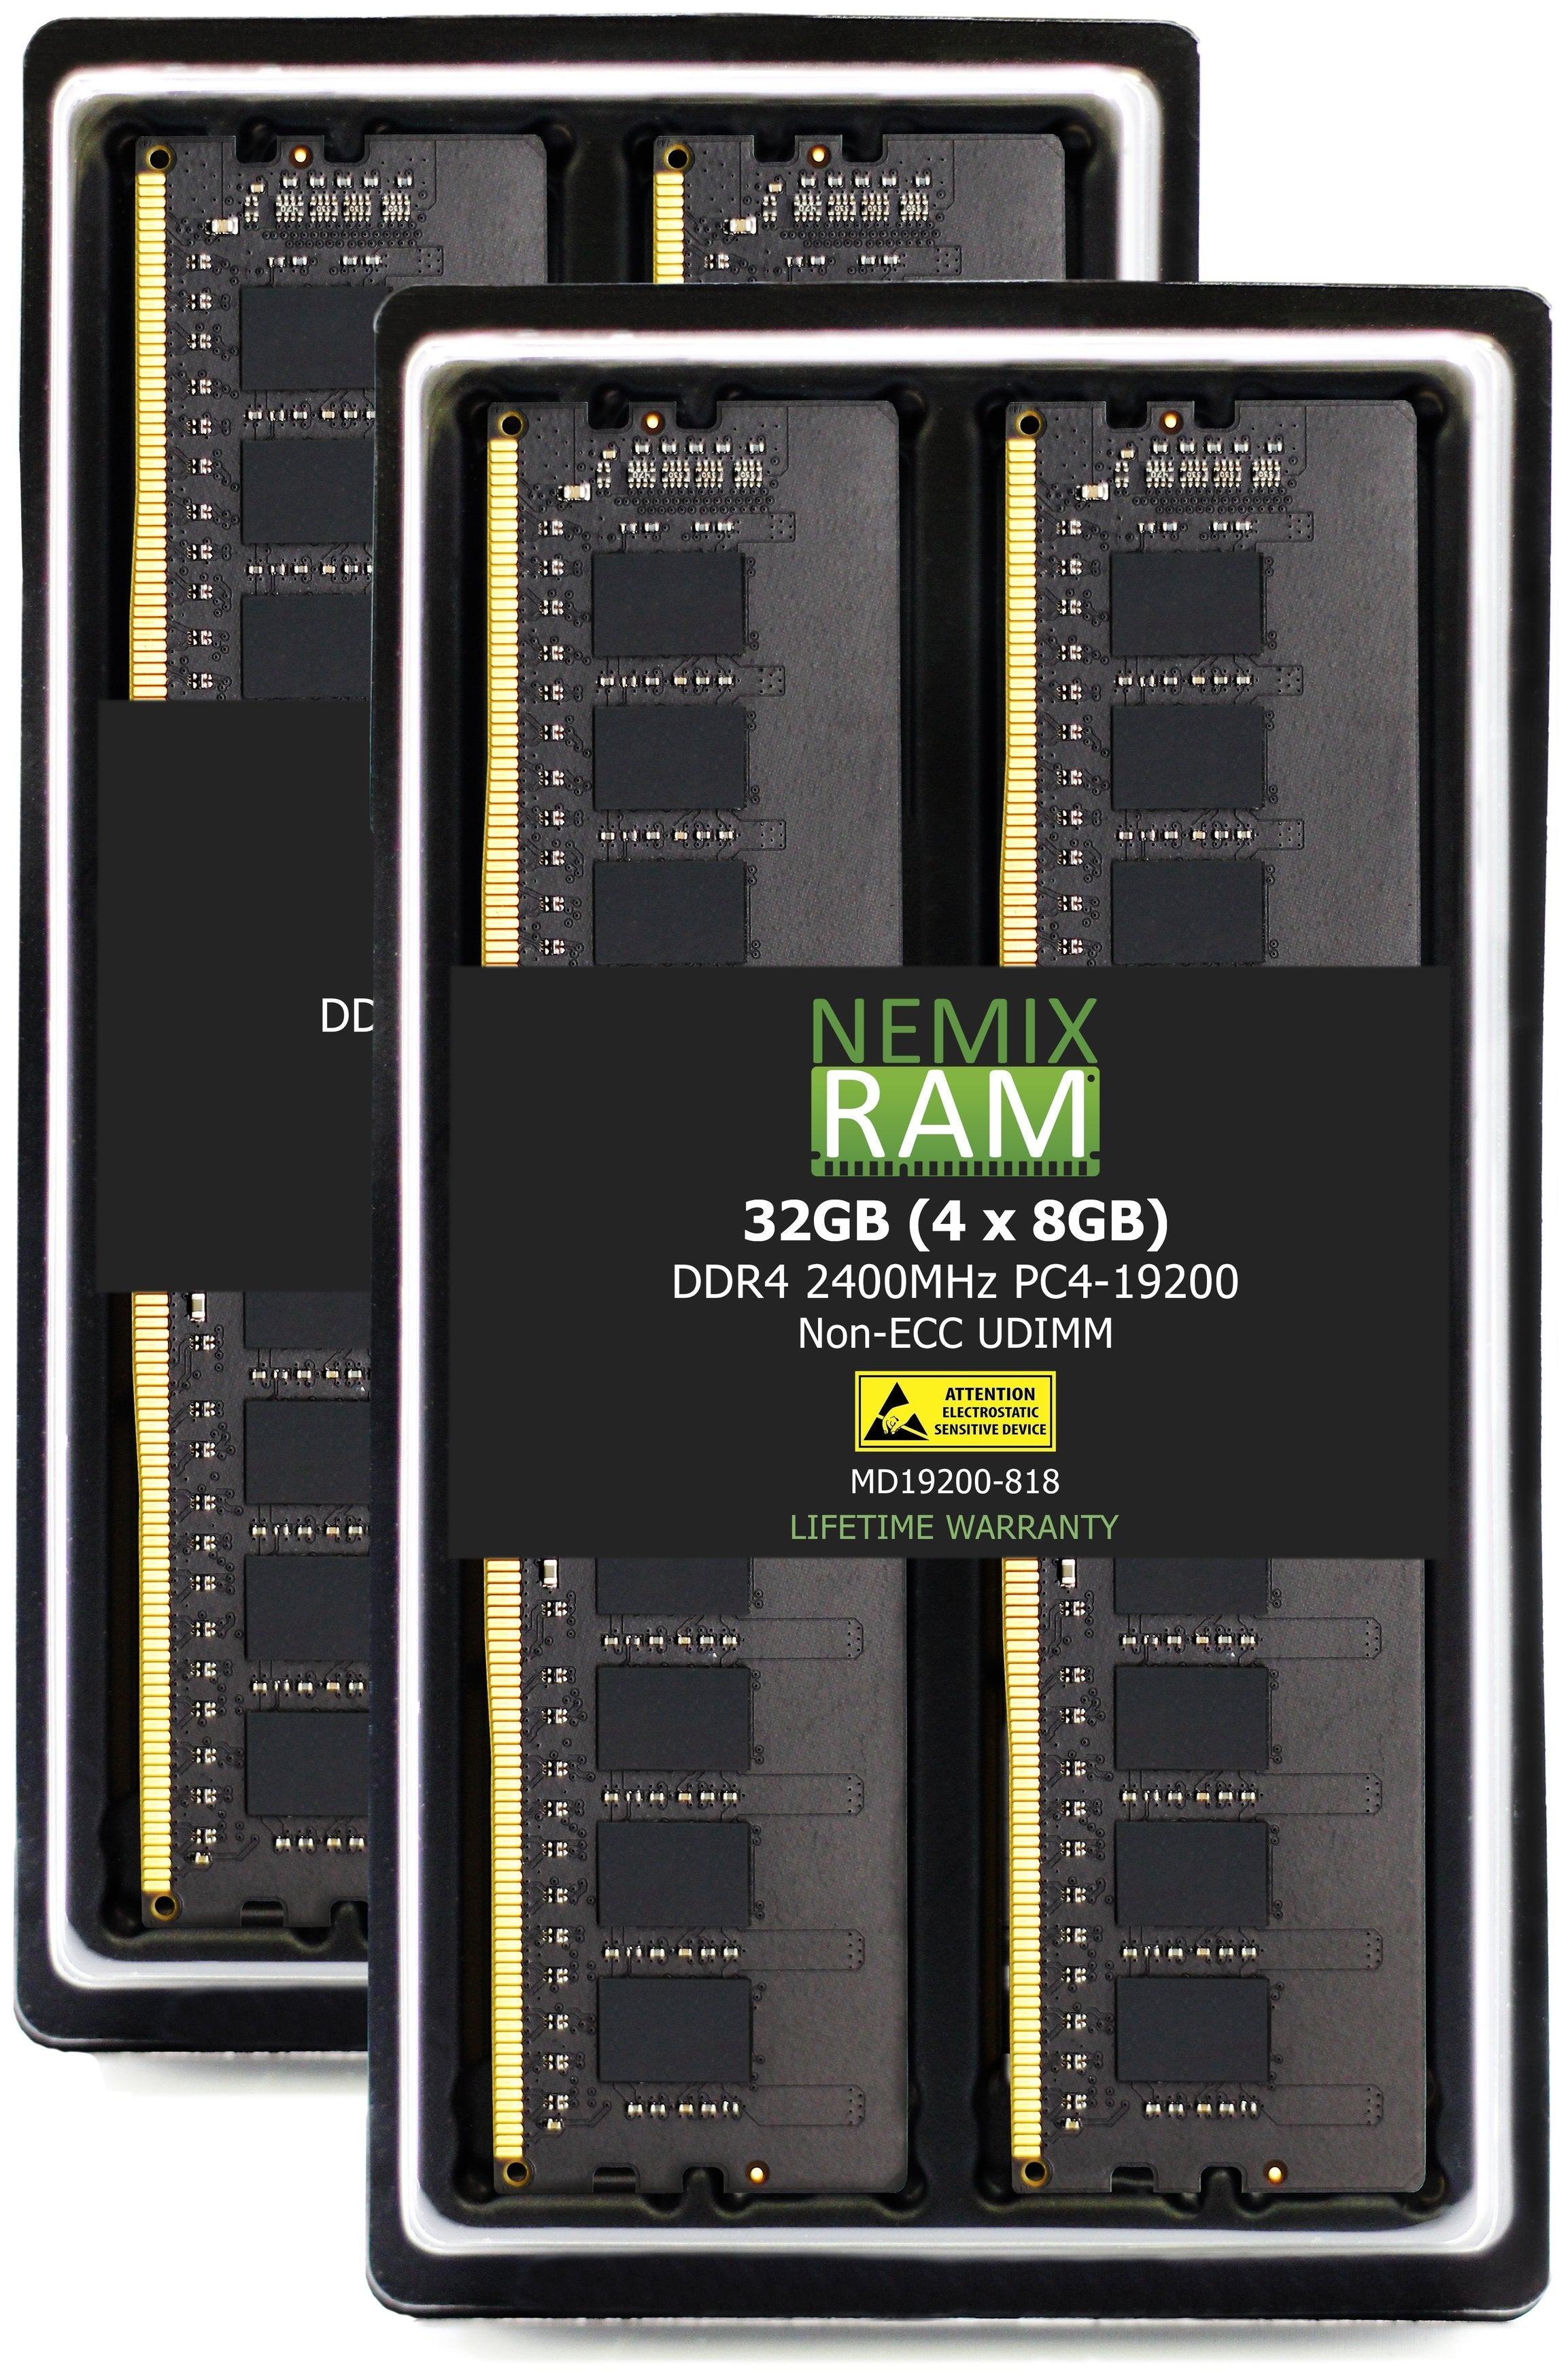 DDR4 2400MHZ PC4-19200 UDIMM 1RX8